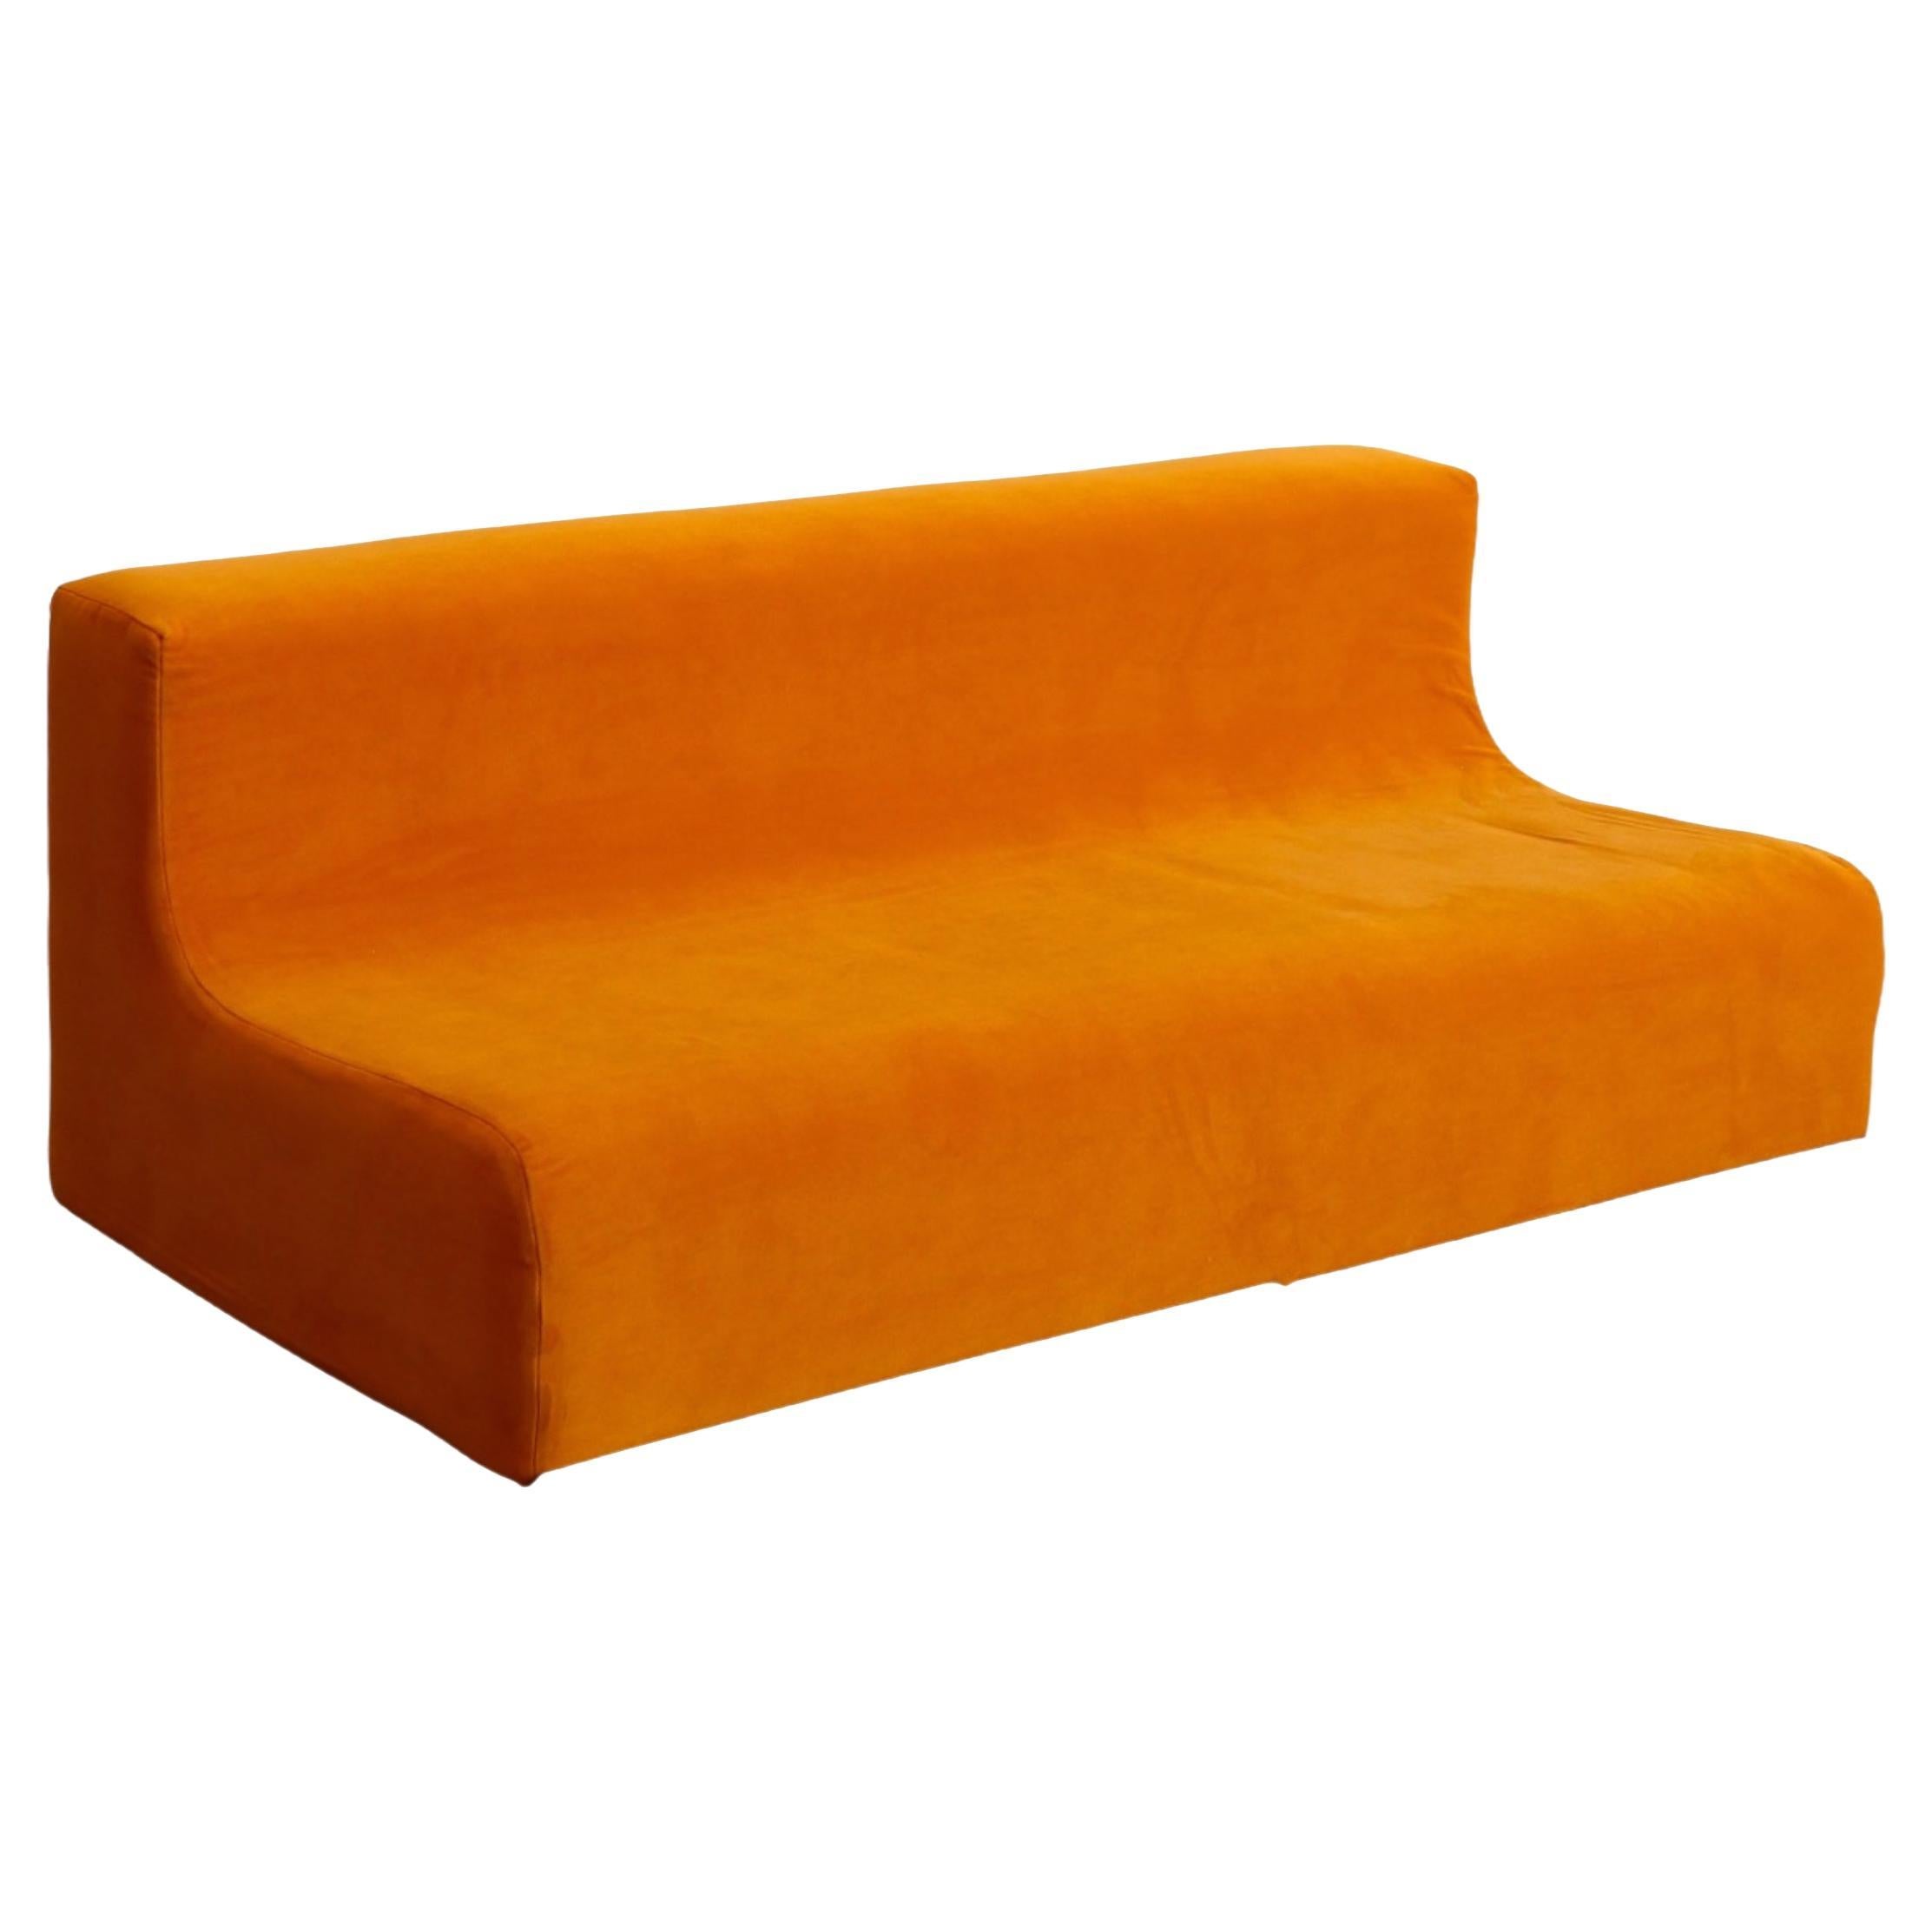 Canapé orange Three Seater de l'ère spatiale